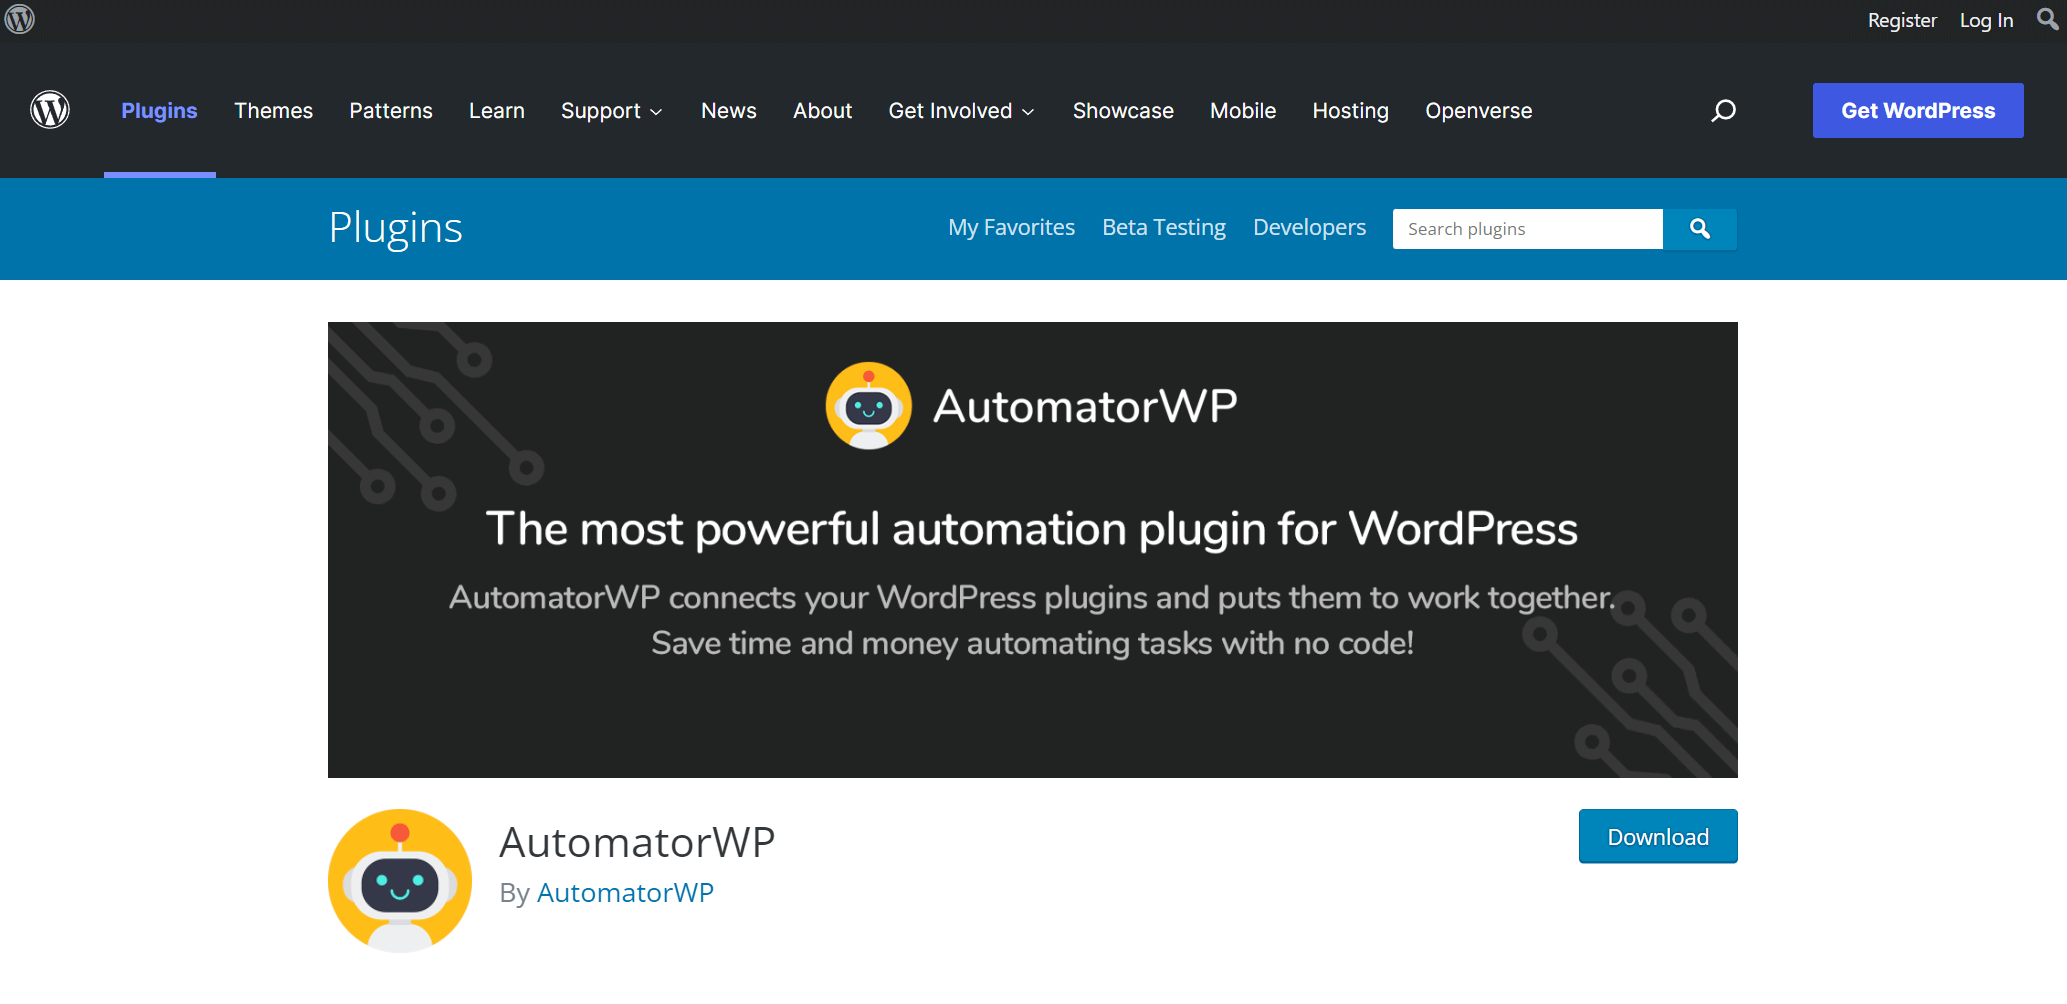 Automation plugin for WordPress